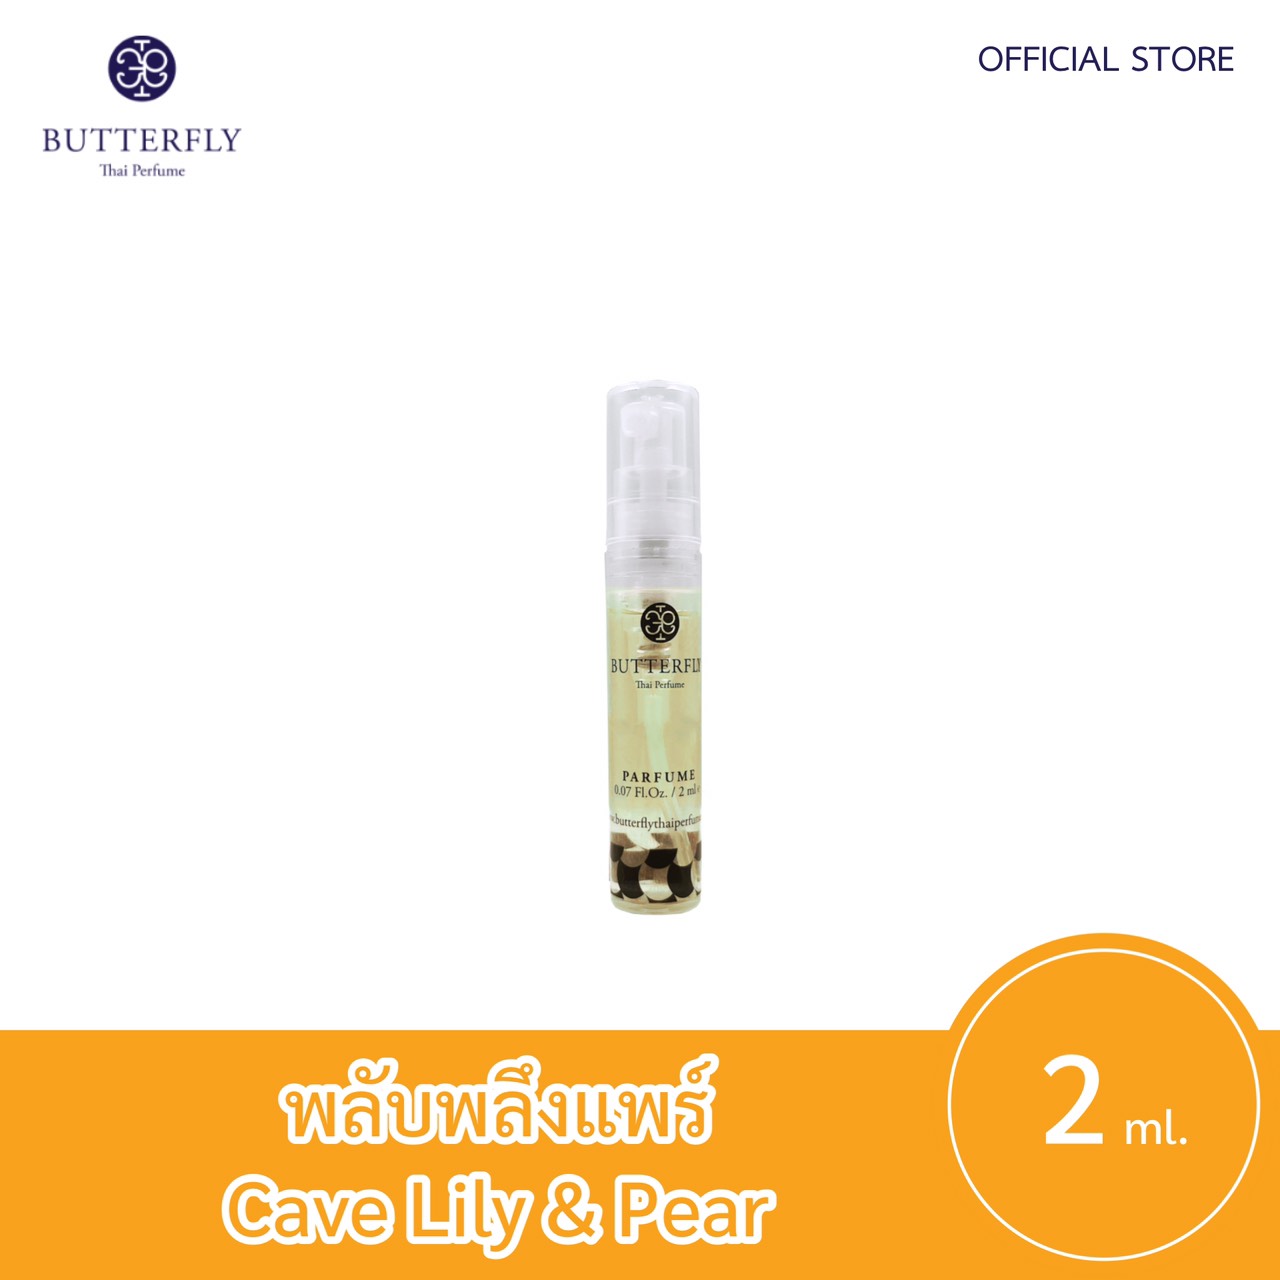 Butterfly Thai Perfume - น้ำหอมบัตเตอร์ฟลาย ไทย เพอร์ฟูม  ขนาดทดลอง 2ml.  กลิ่น พลับพลึงแพร์ปริมาณ (มล.) 2